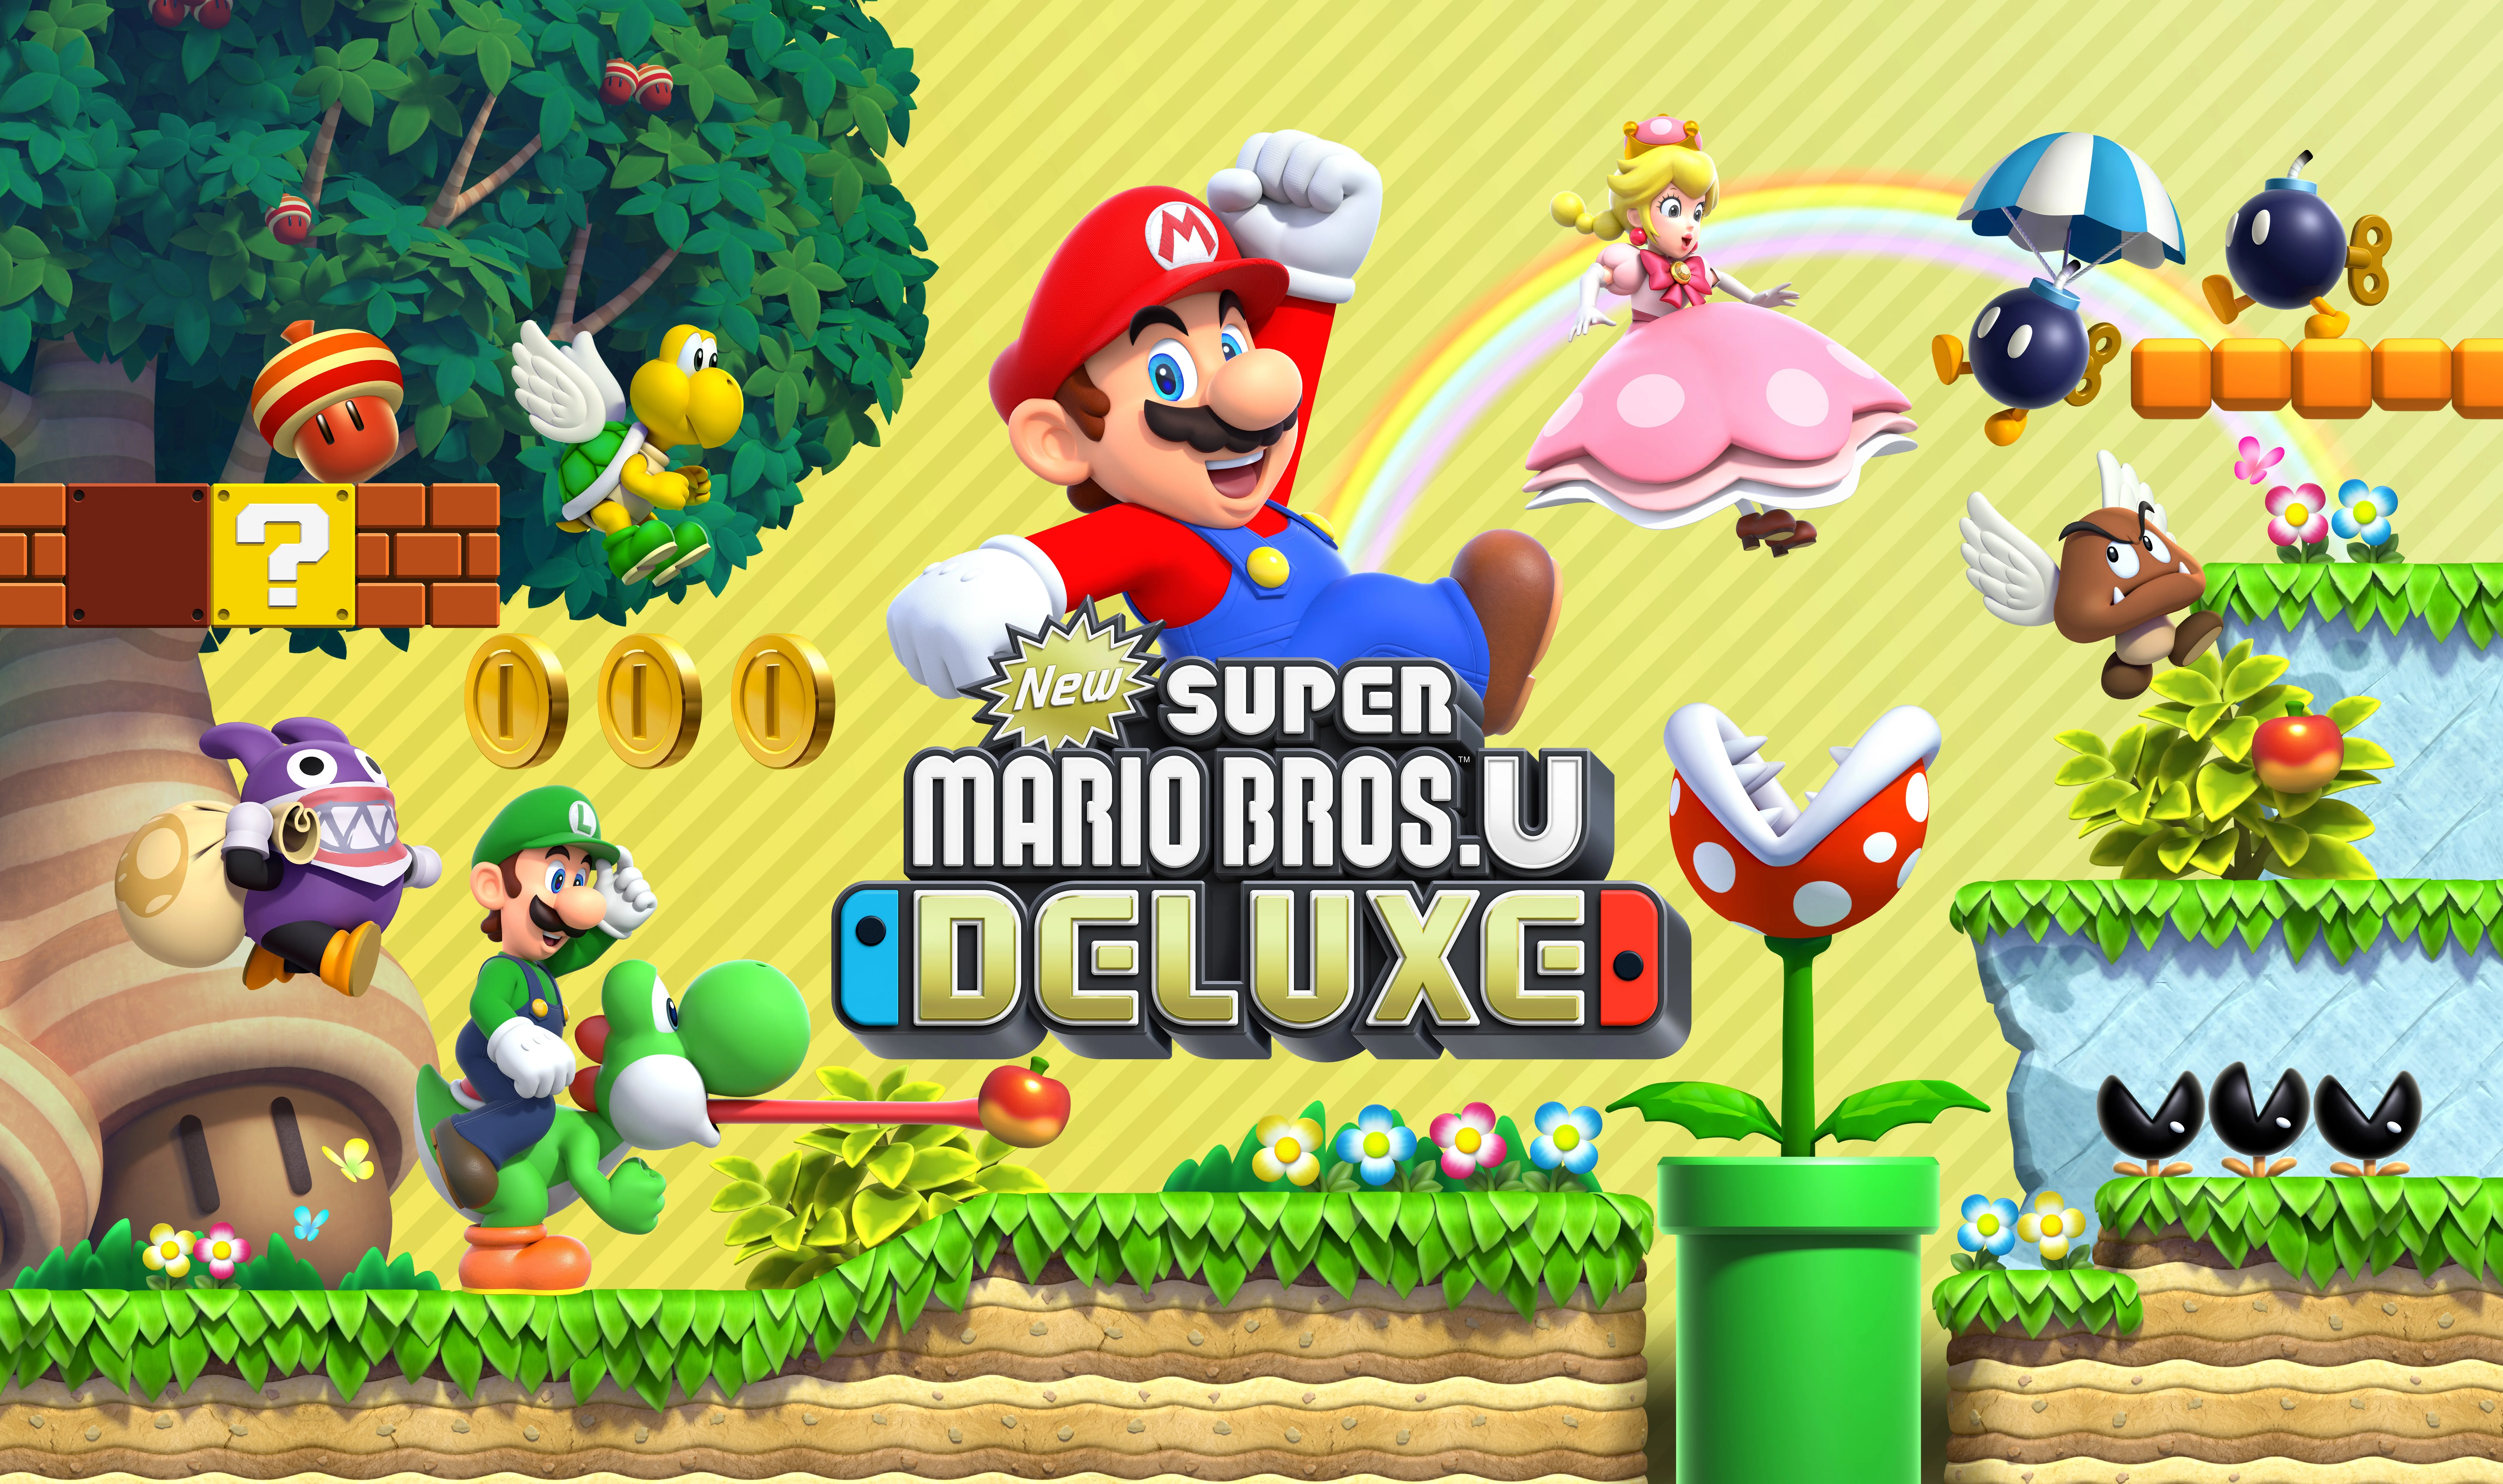 Mario bros nintendo switch. New super Mario Bros u Deluxe Nintendo Switch. Игра New super Mario Bros. U Deluxe. New super Mario Bros. U Deluxe для Nintendo Switch обложка. Игры super Mario Bros Нинтендо.